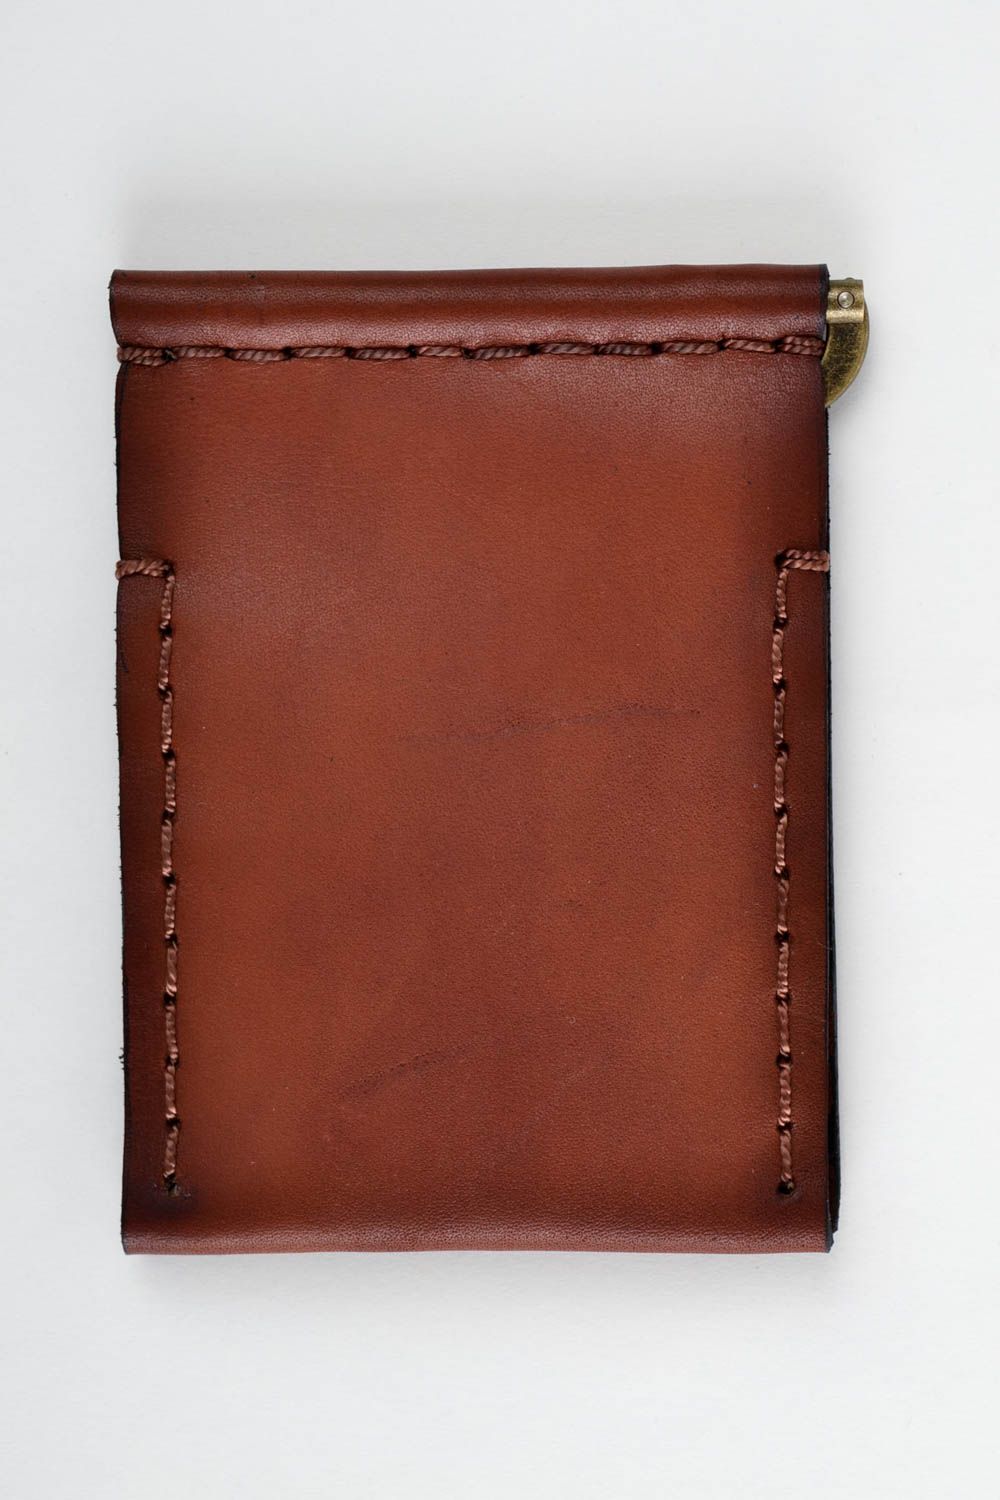 Stylish handmade leather wallet money clip gentlemen only fashion accessories photo 5